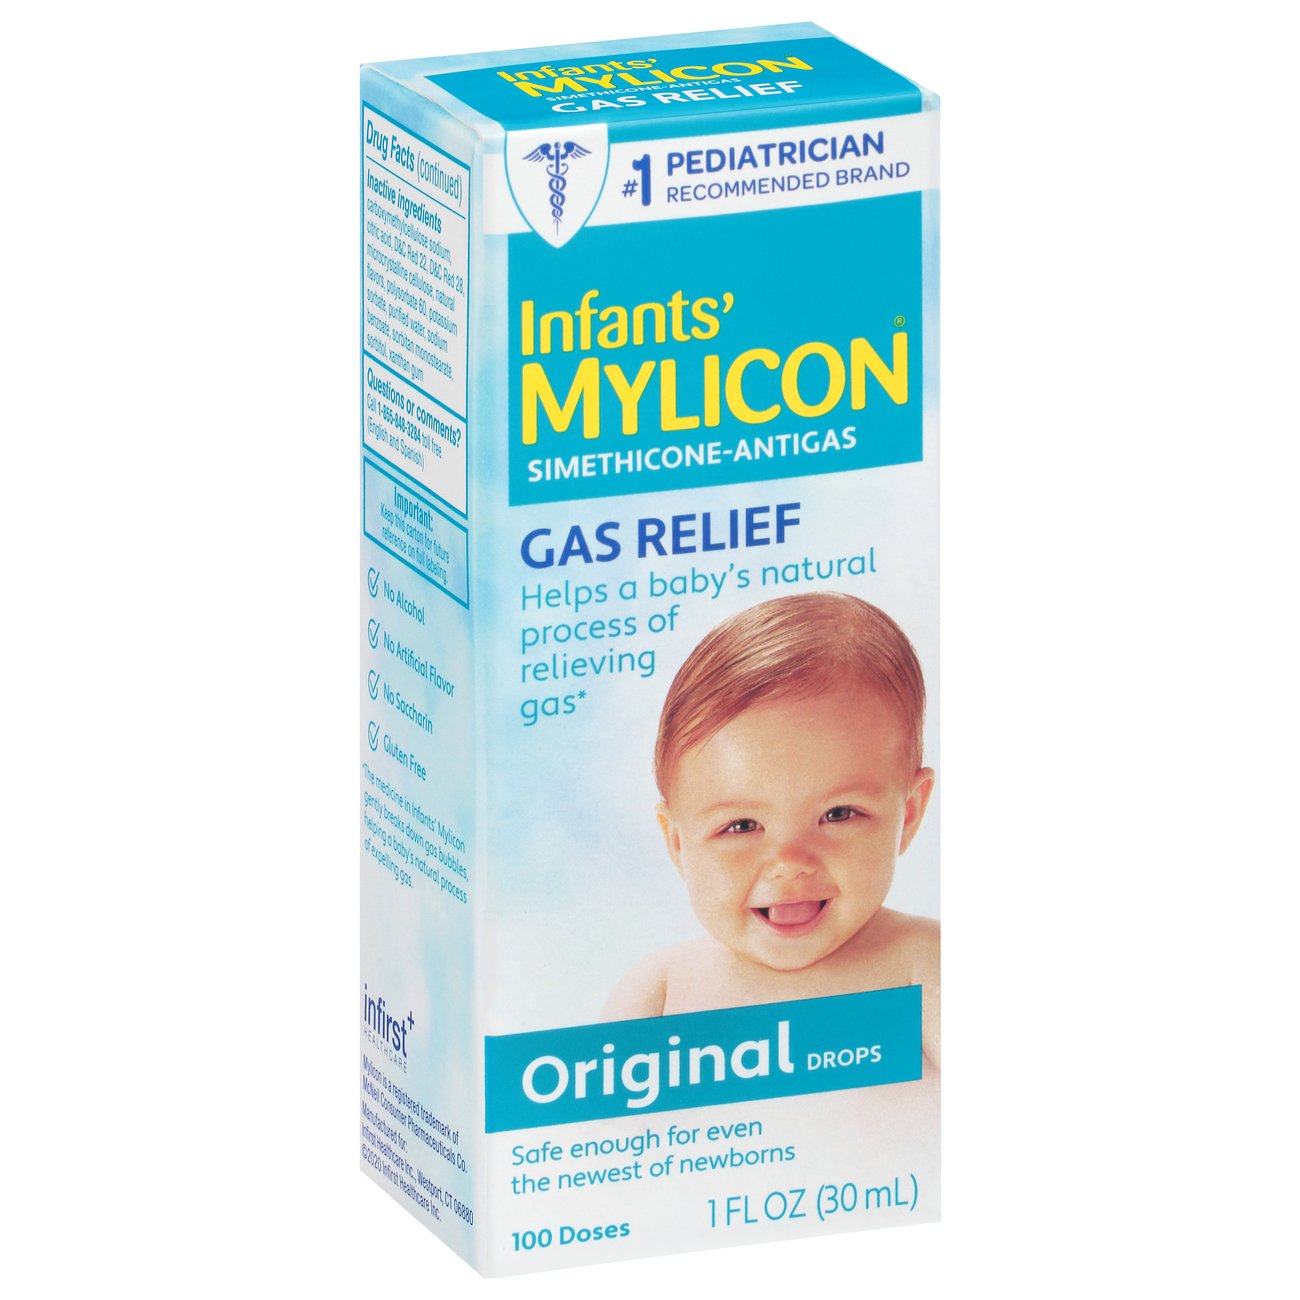 mylicon kids